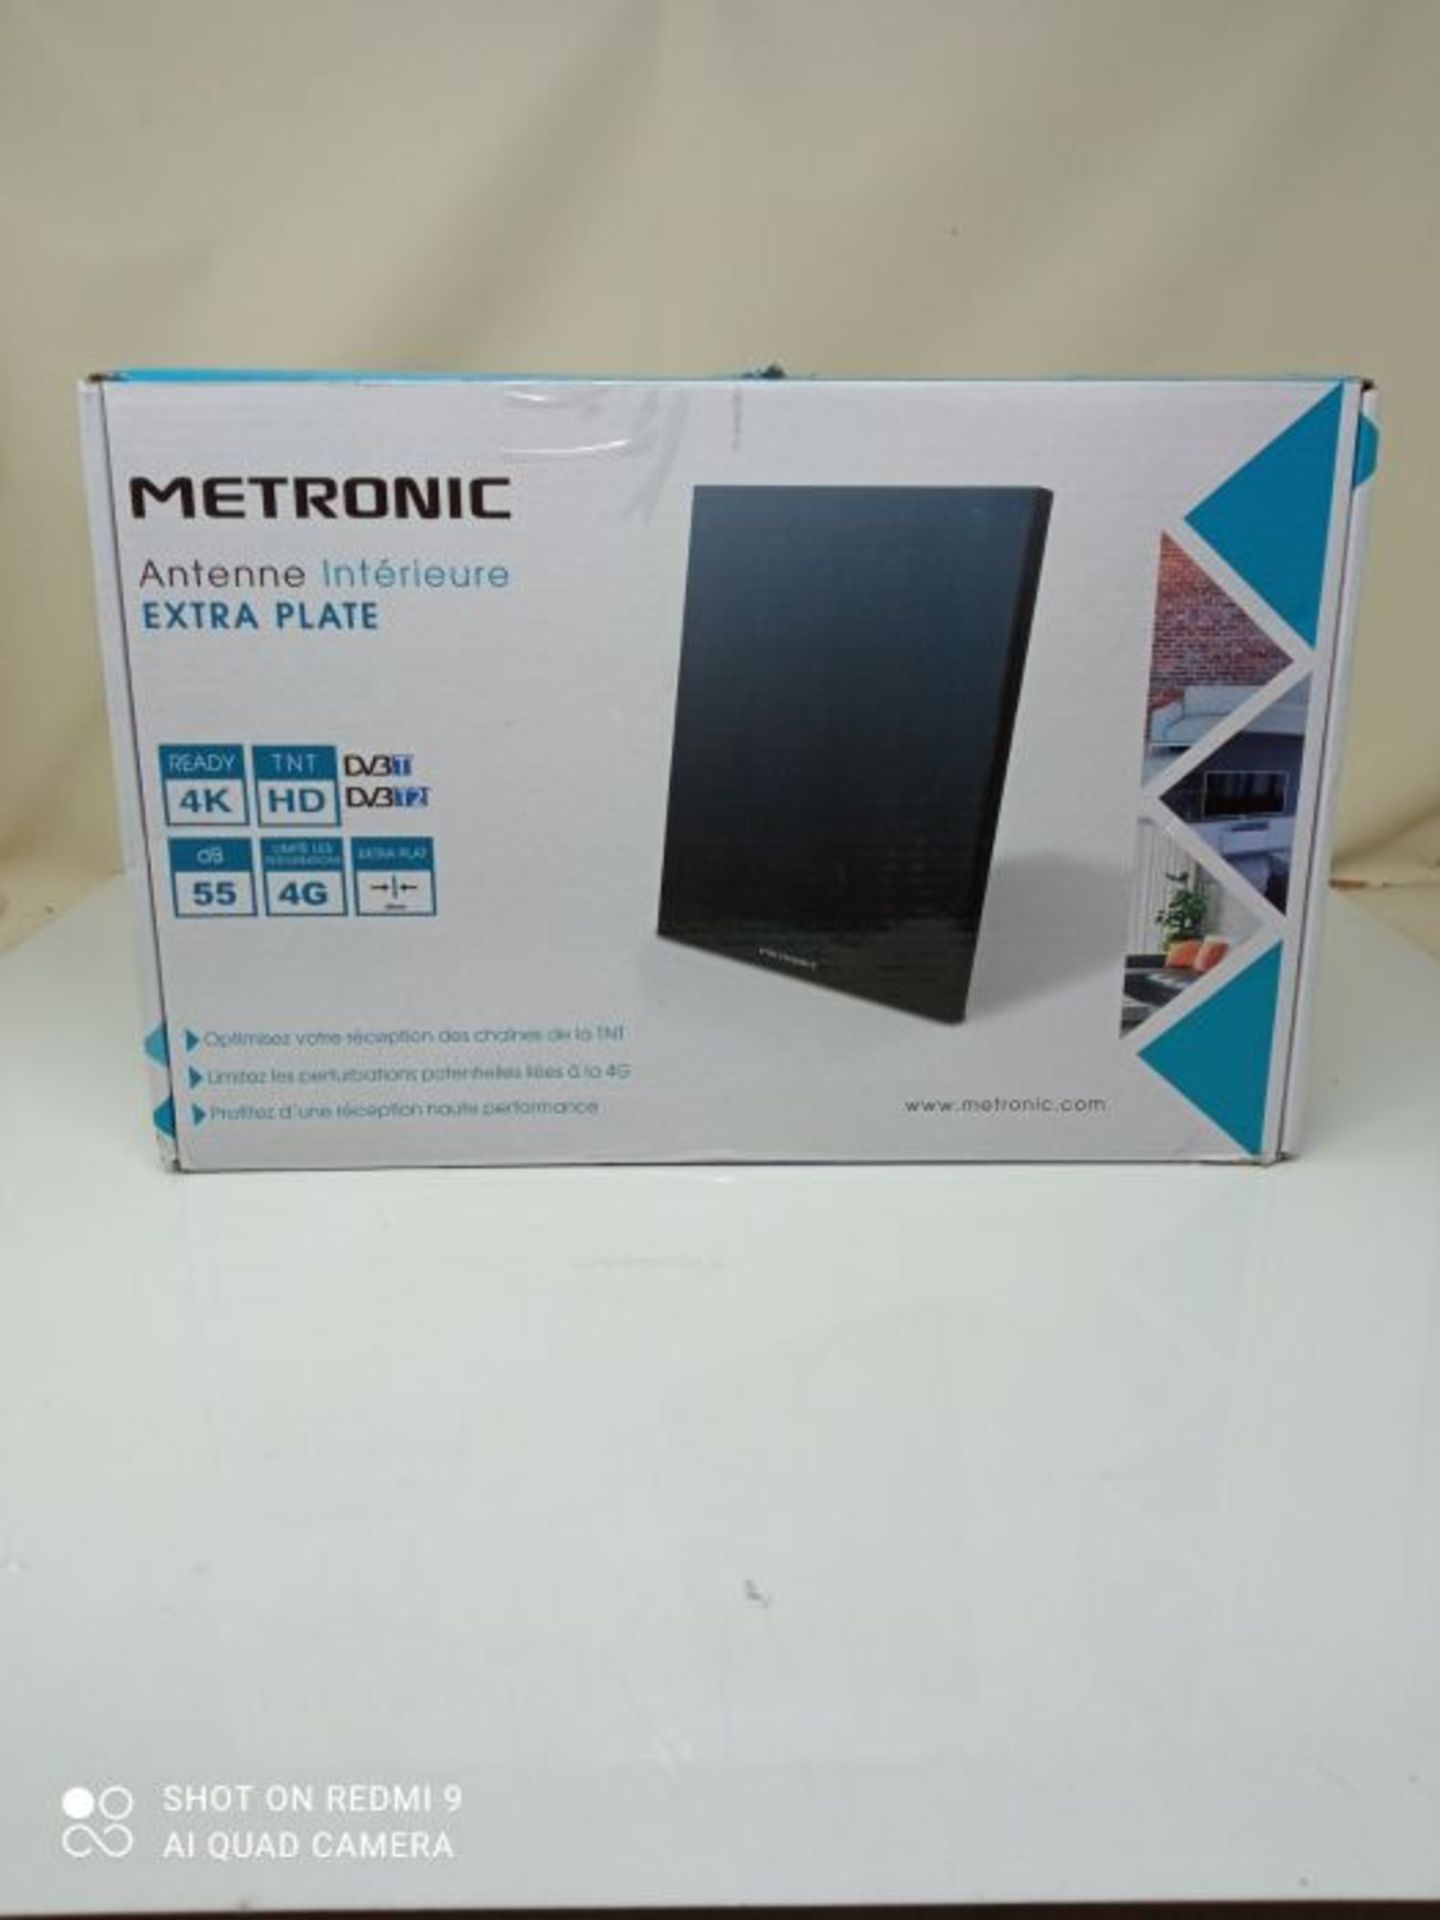 Metronic 416975 Slim Low Profile High Resolution HDTV Indoor Antenna, Black - Image 2 of 3